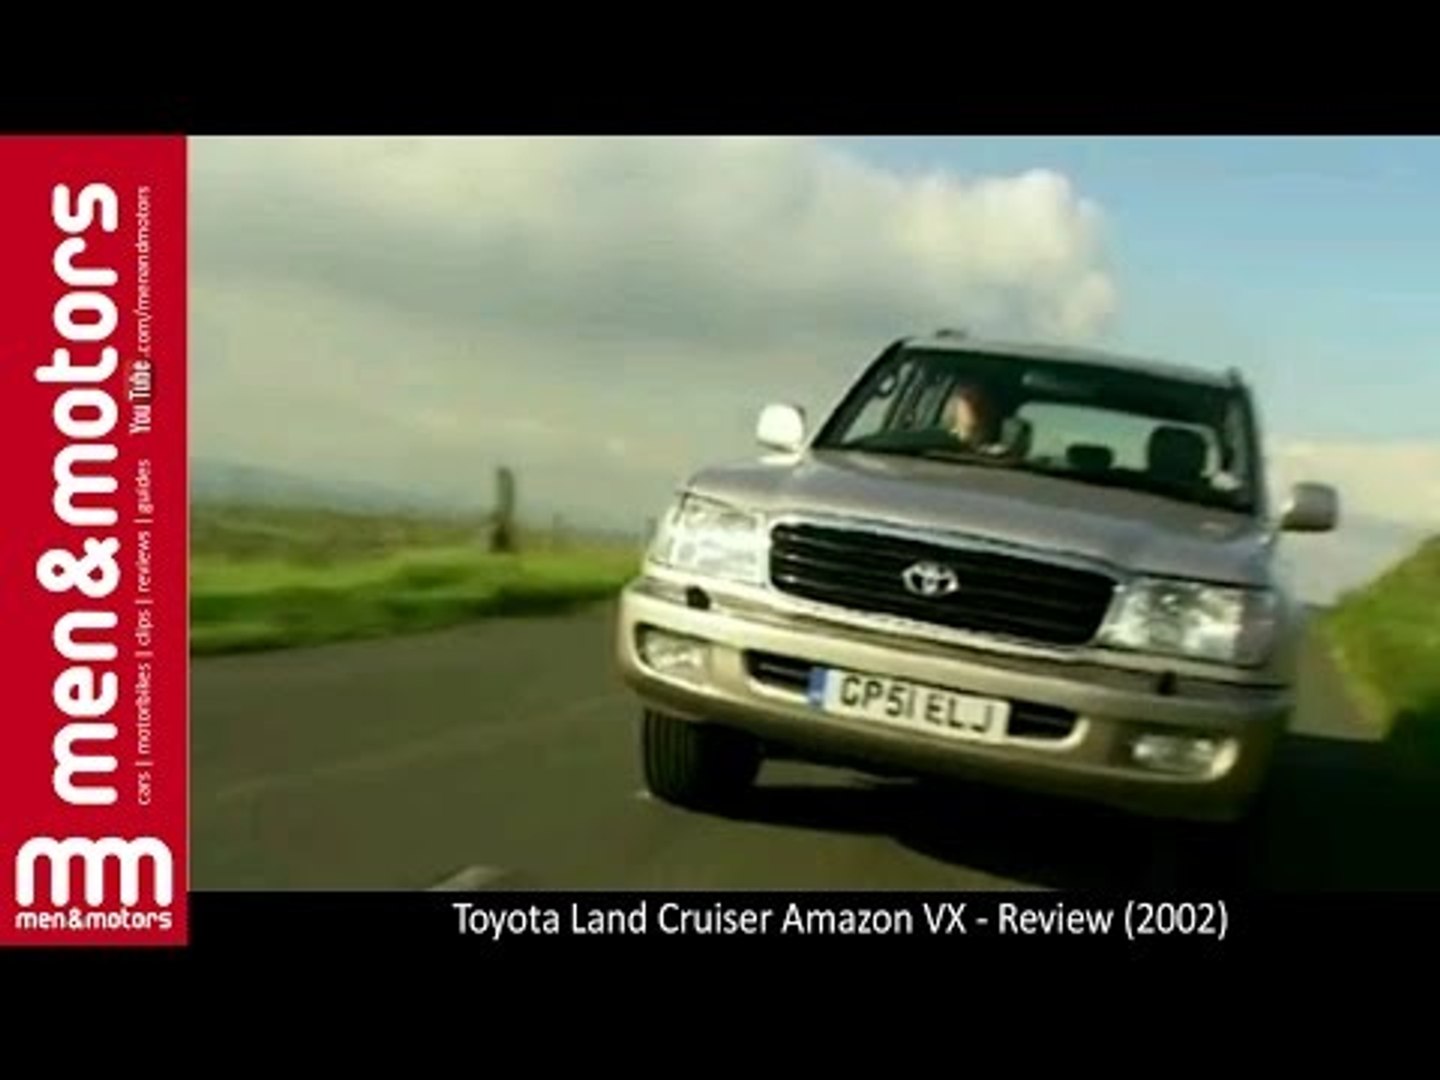 Toyota Land Cruiser Amazon VX - Review (2002) - video Dailymotion